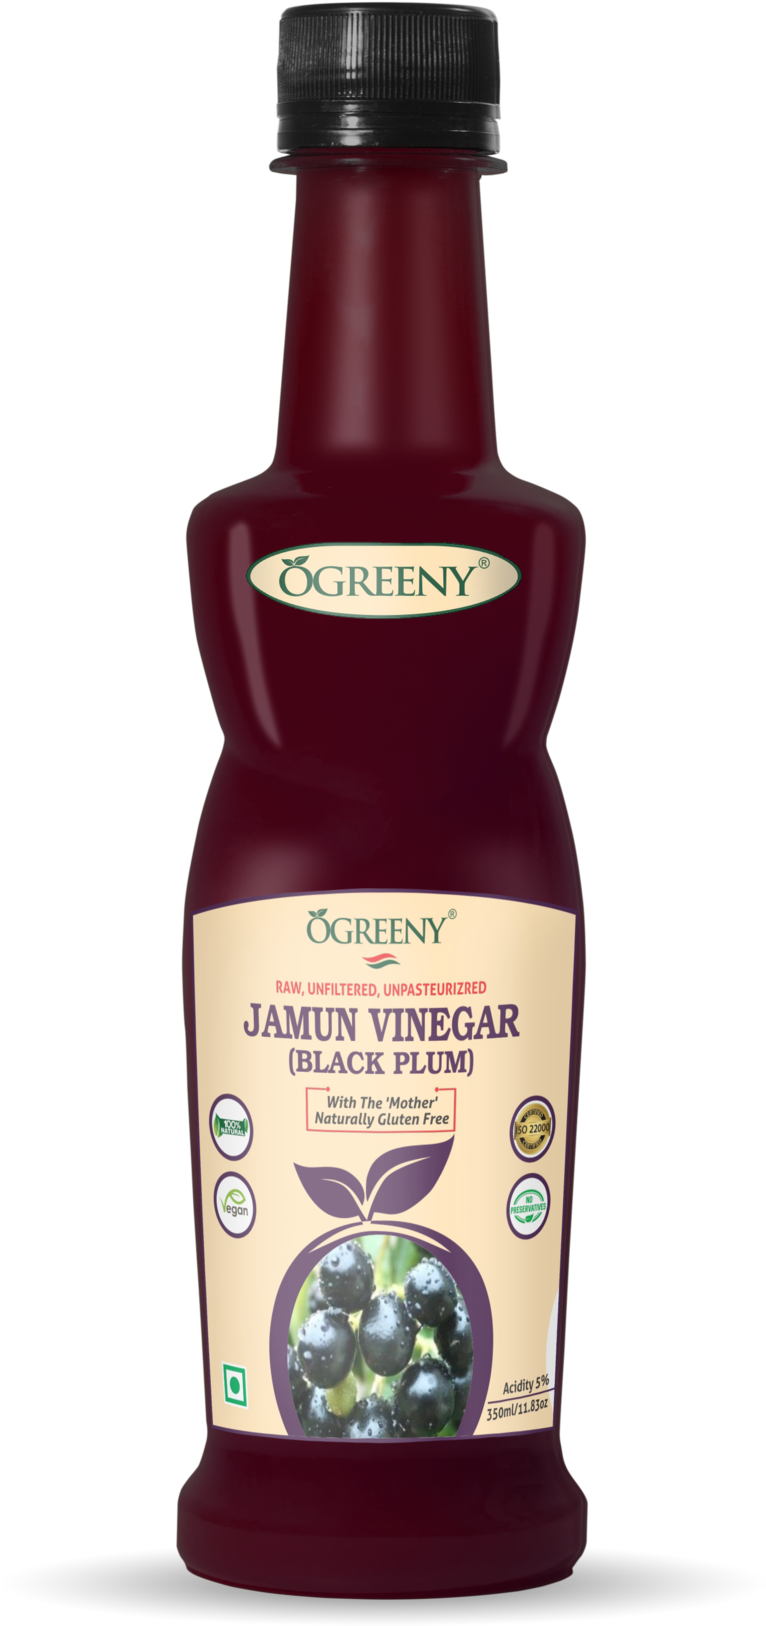 A Bottle Of Jamun Vinegar